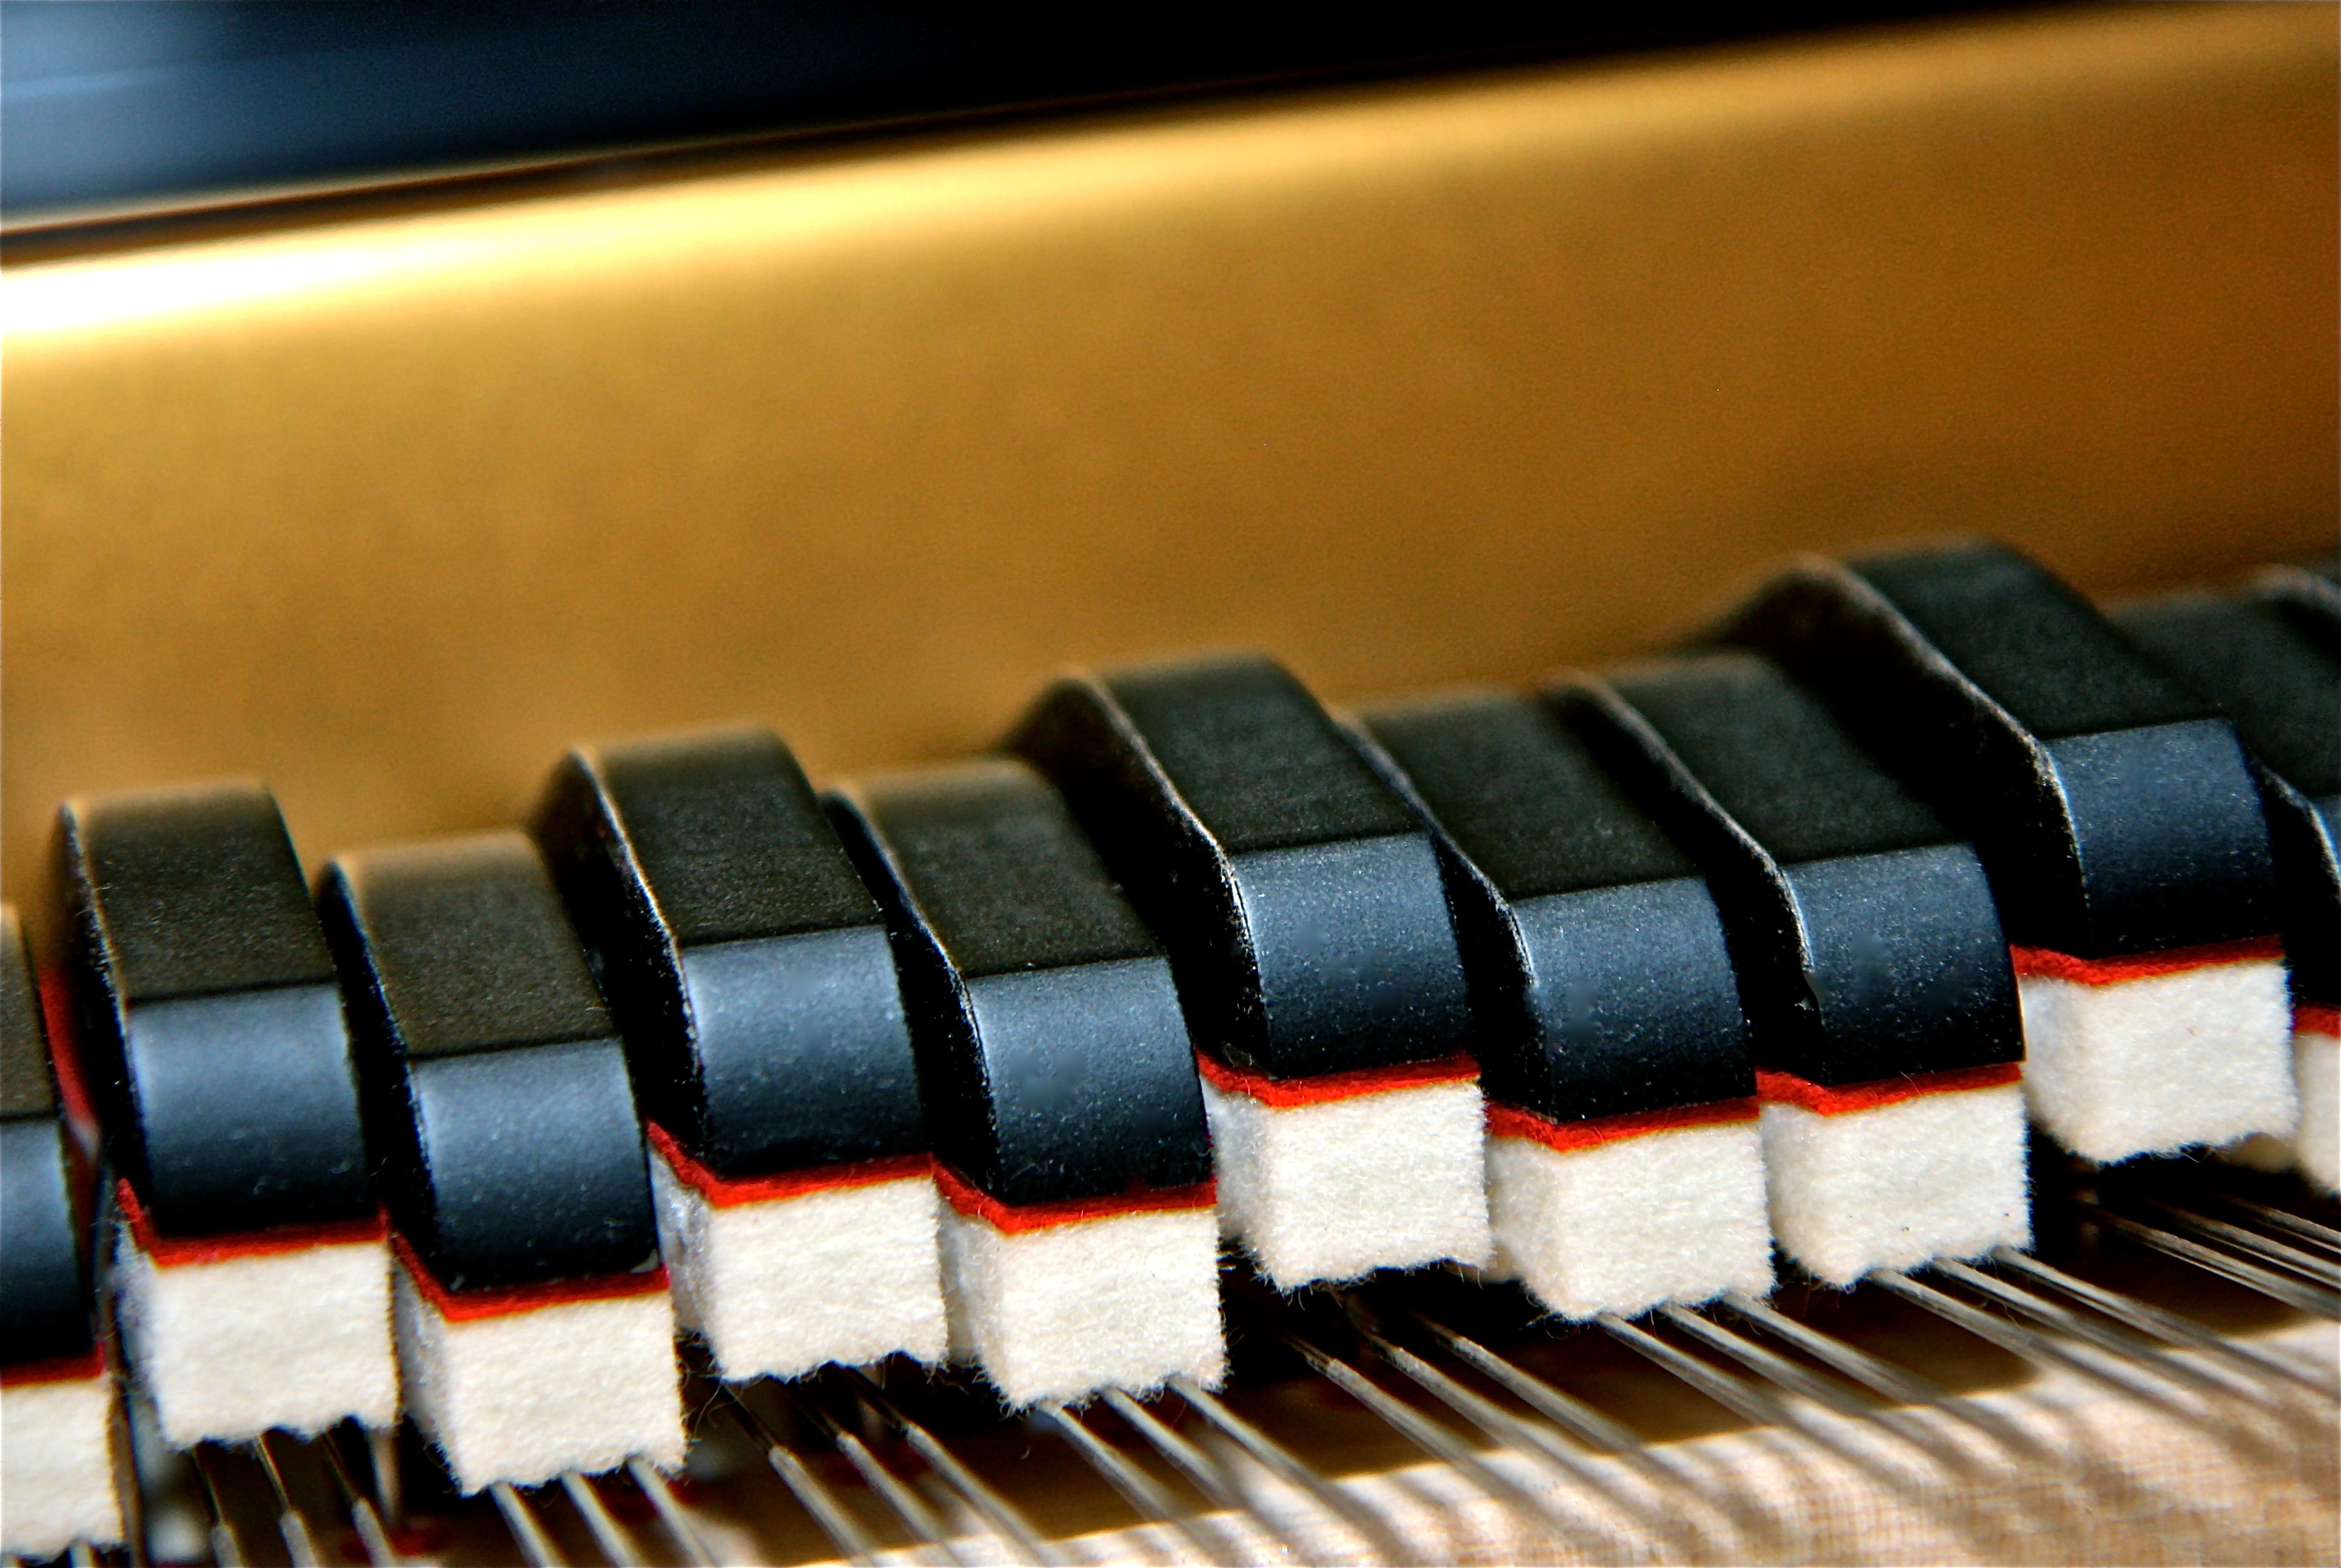 Piano keys up close